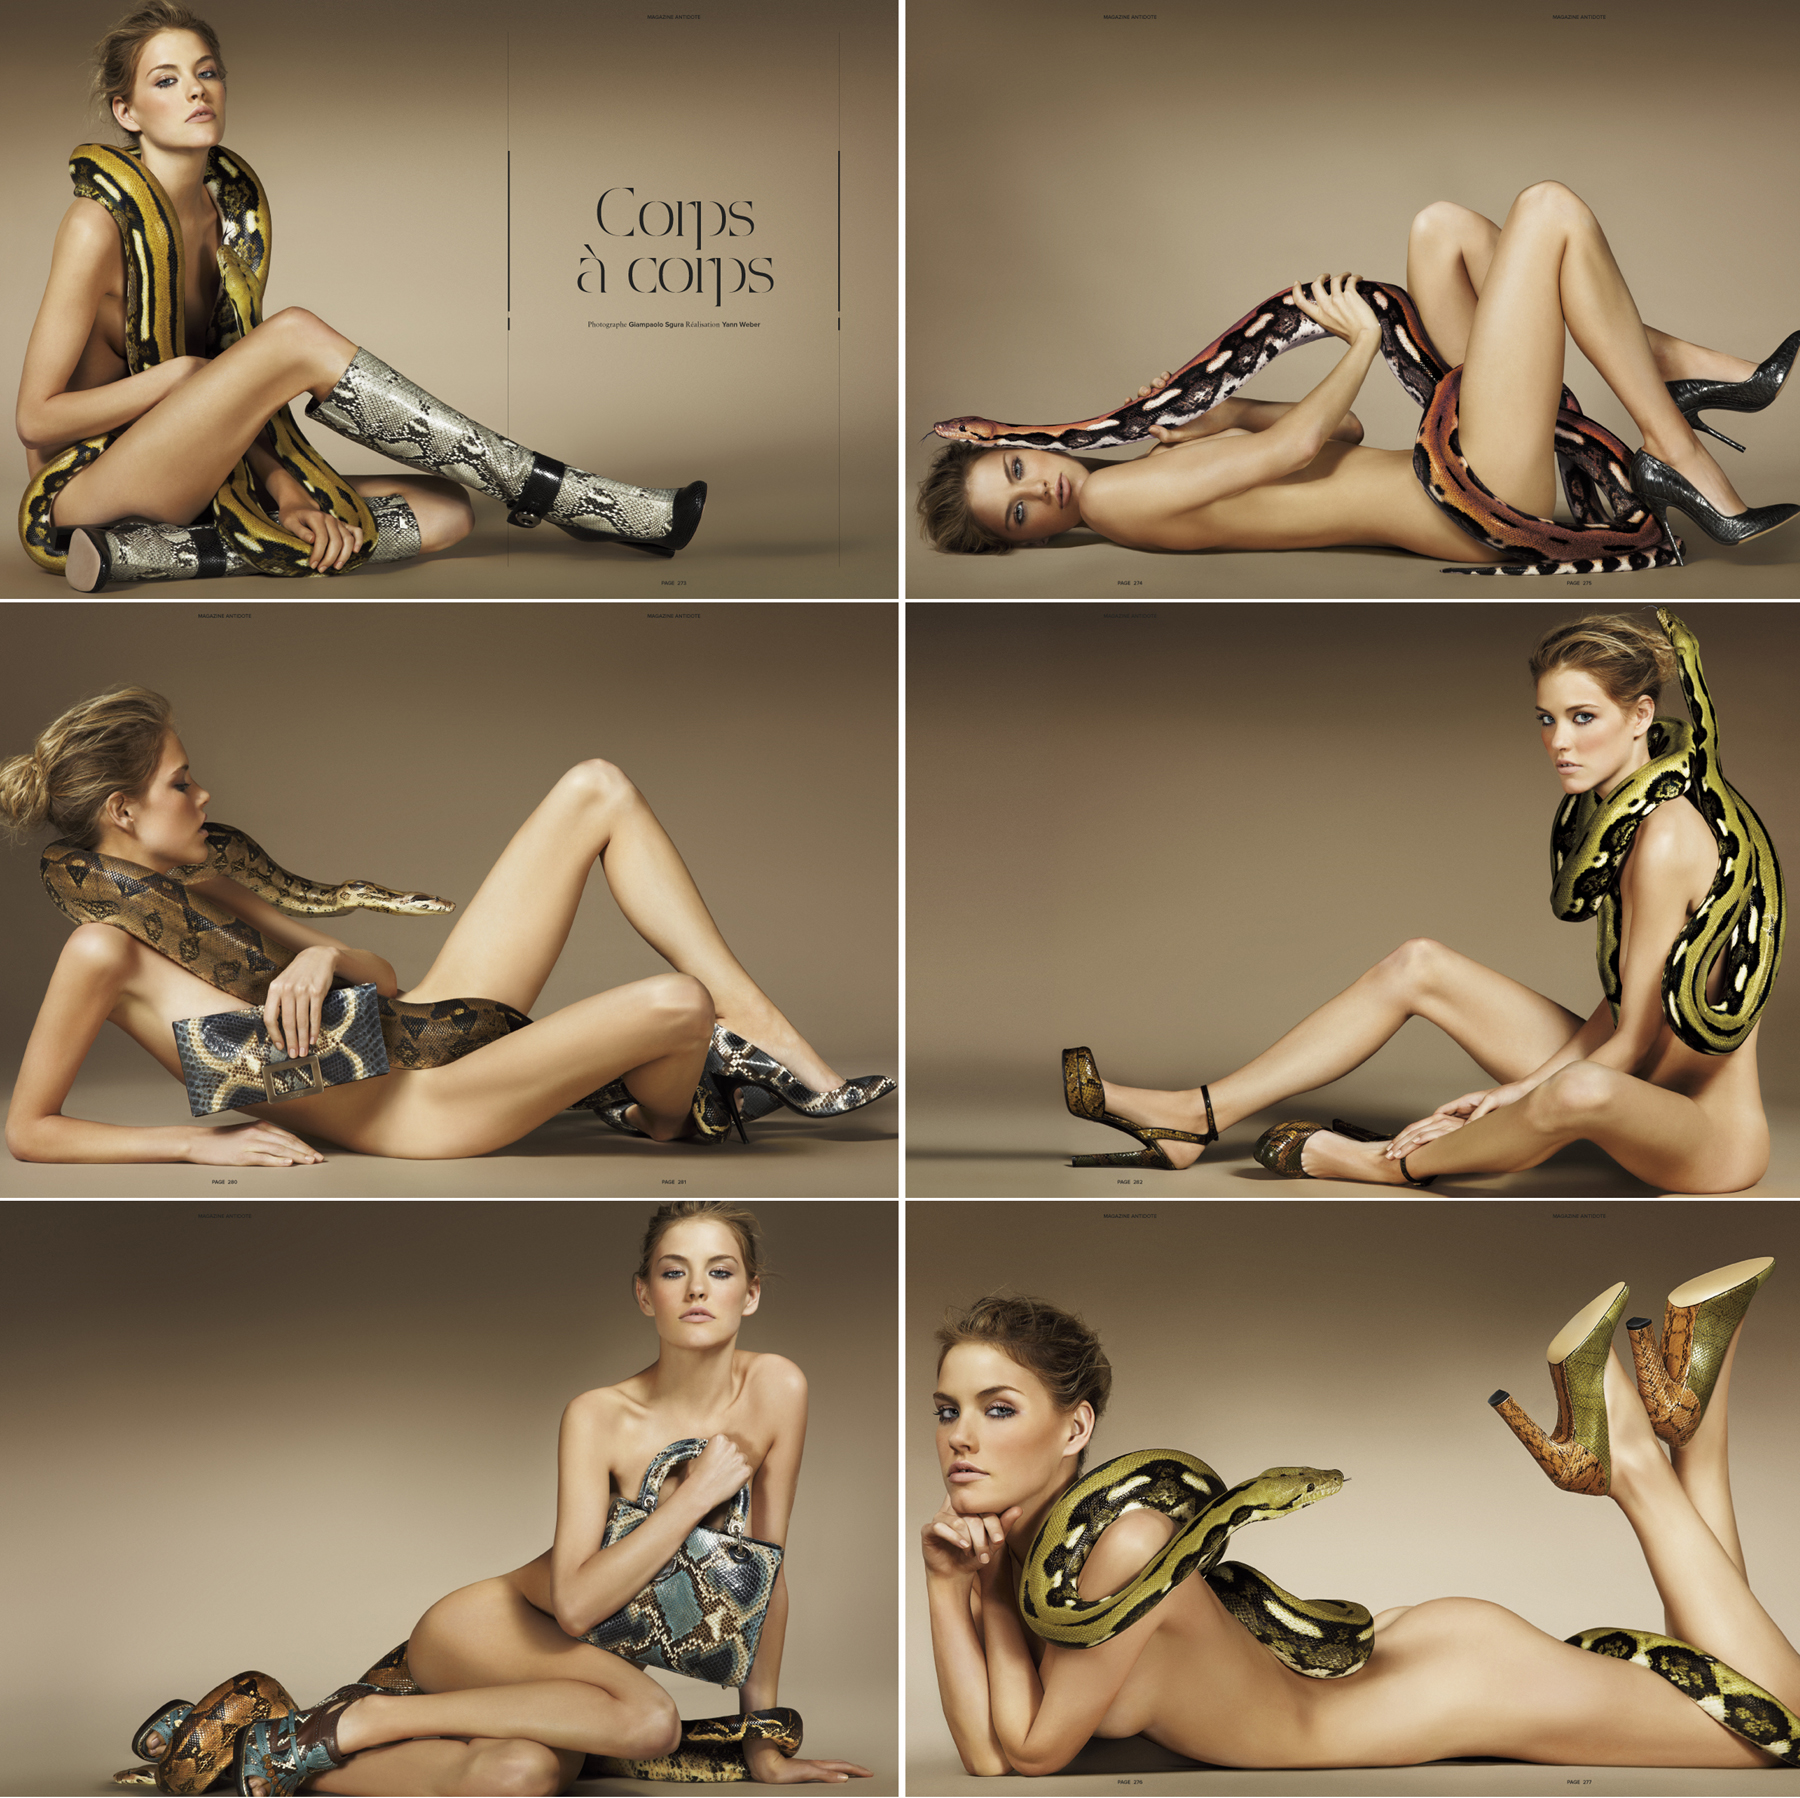 dennis gerona share naked lady with snake photos